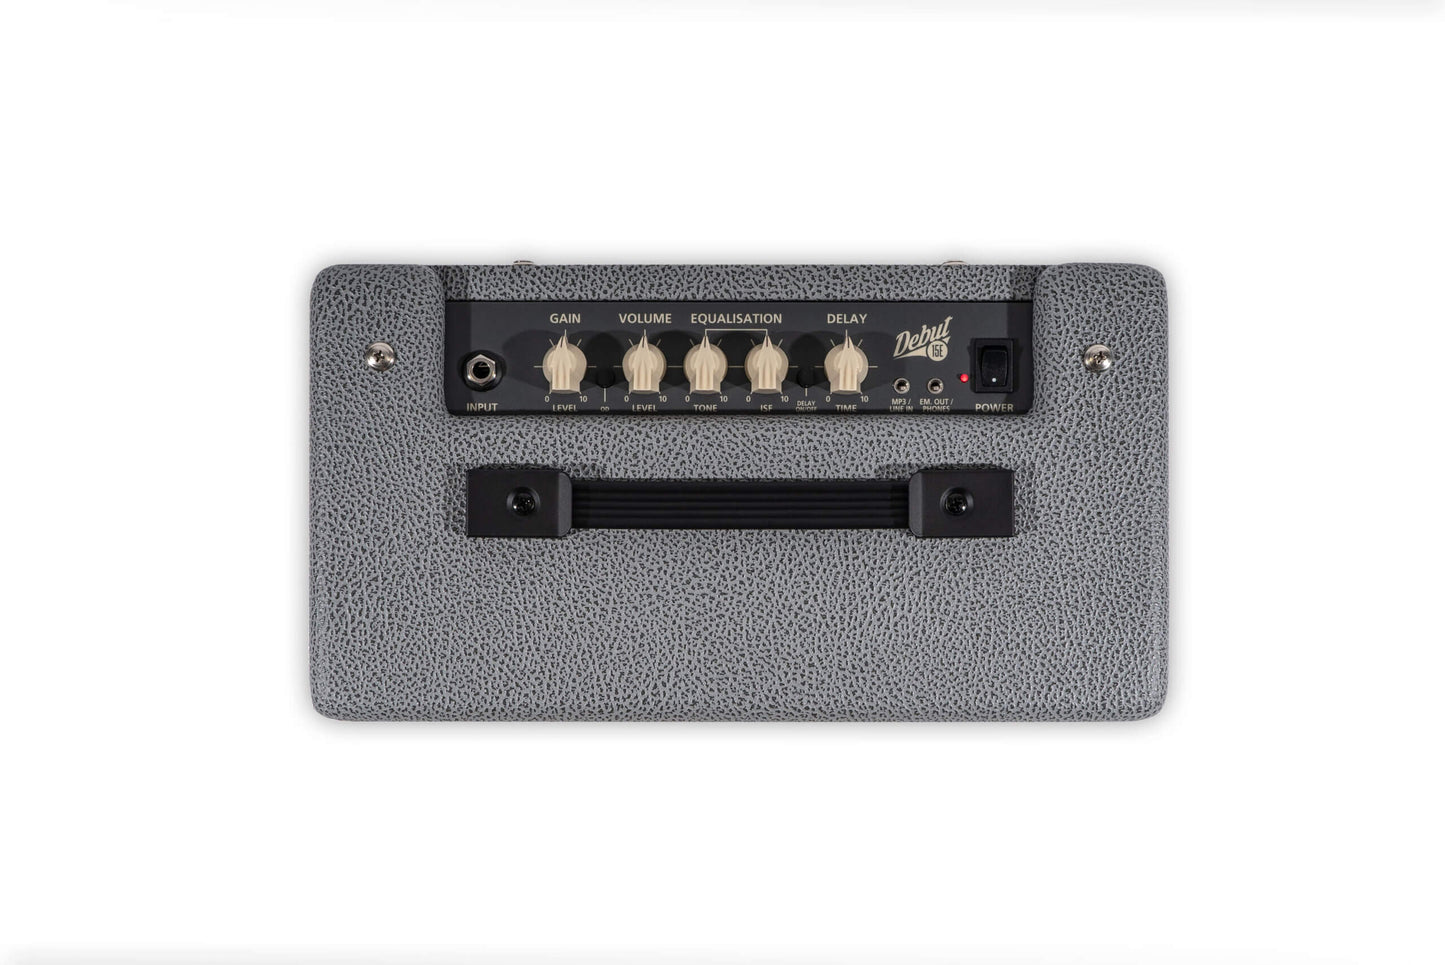 Blackstar 15E-BG Guitar Amplifier - Bronco Grey (Each)